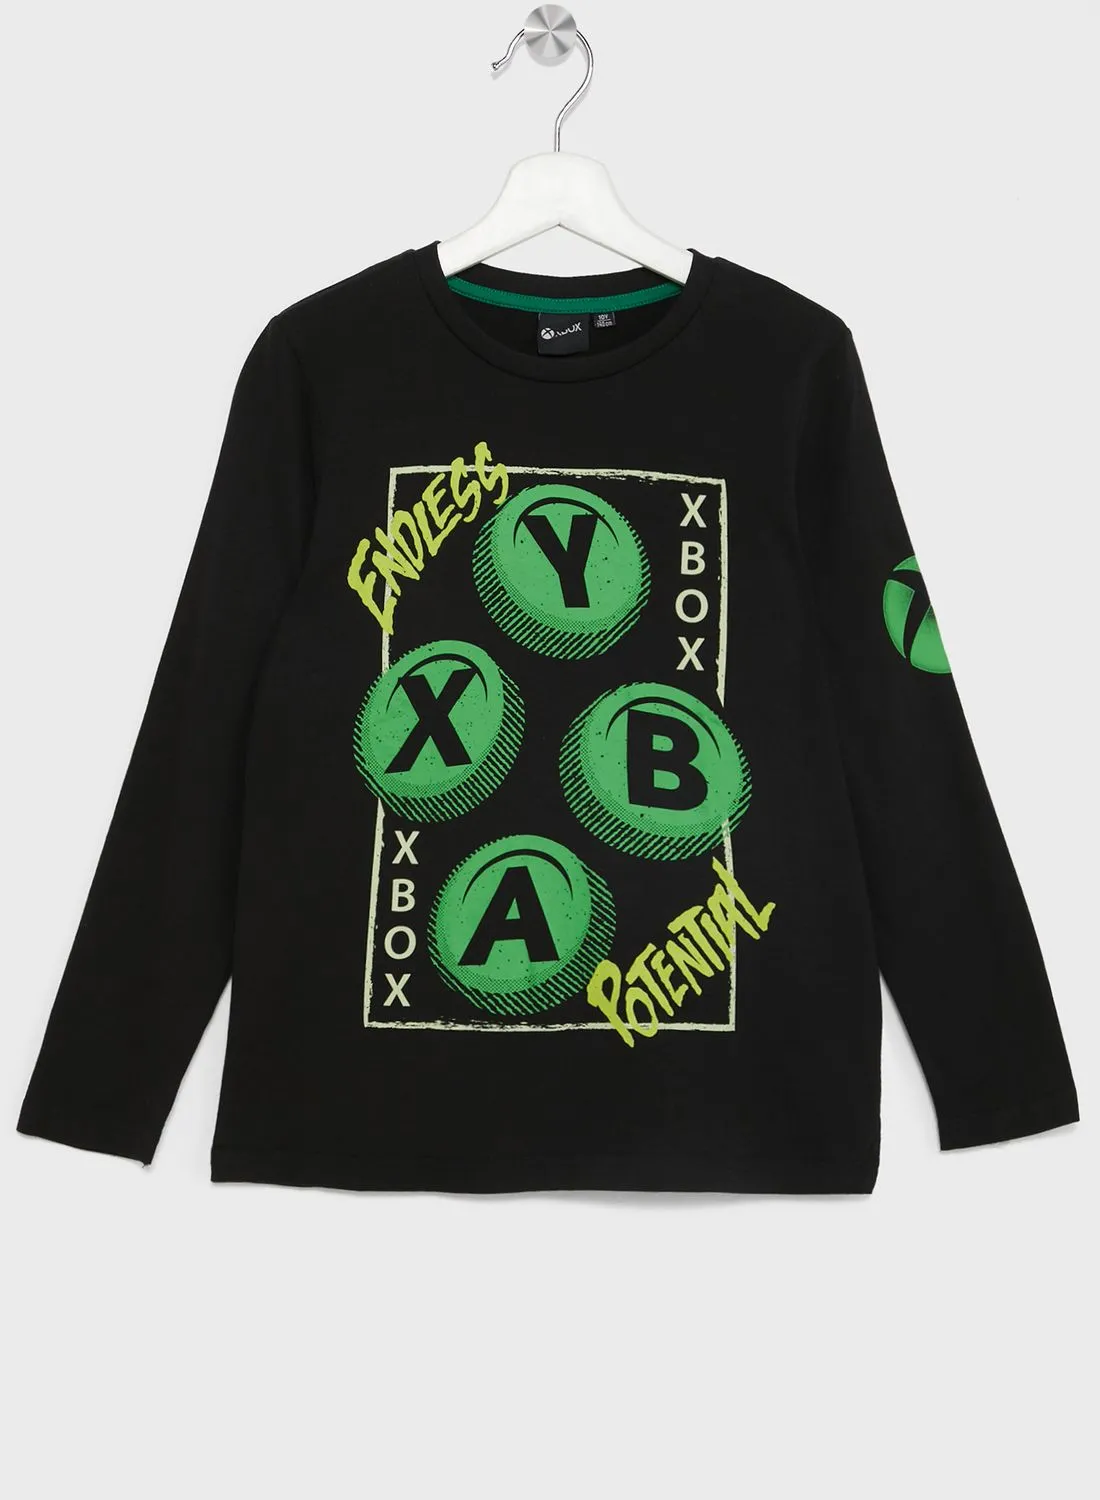 XBOX Xbox Boys Printed Long Sleeve T-Shirt